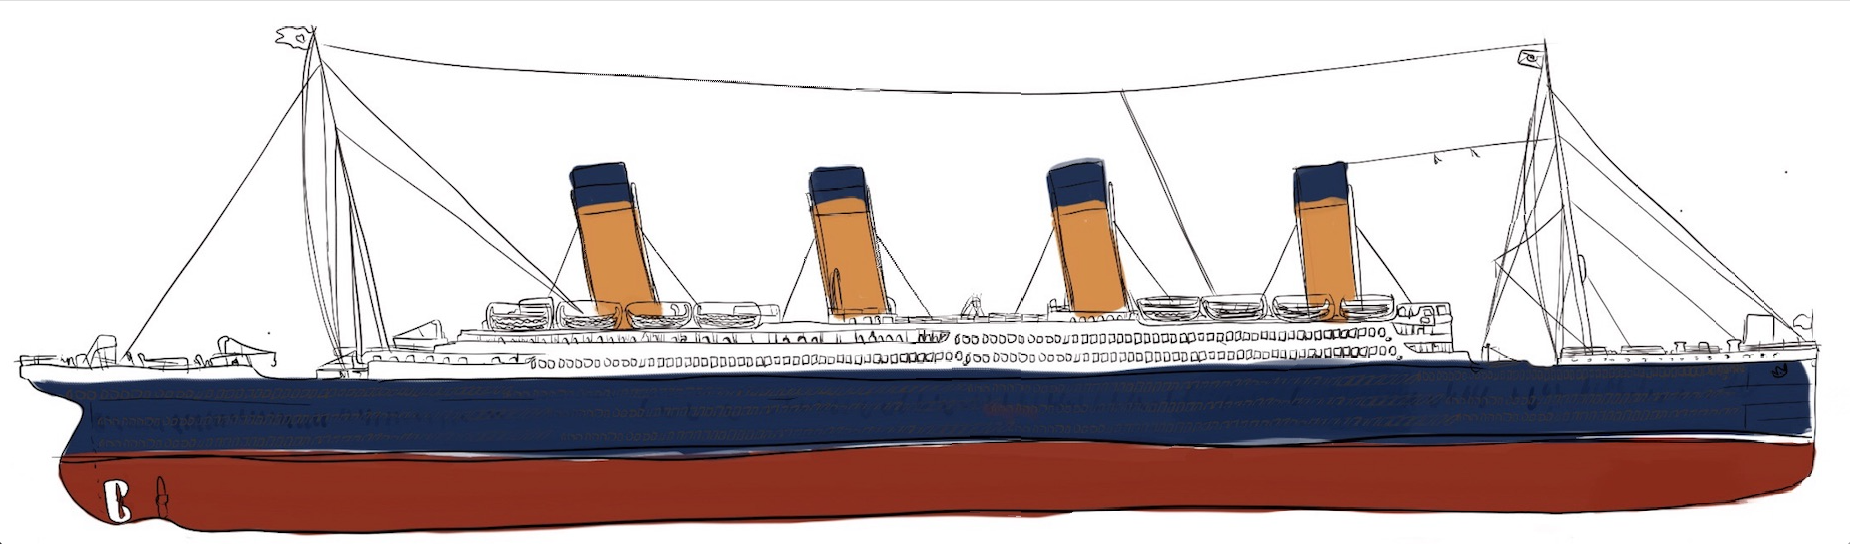 The Design Titanic Passengers Web App